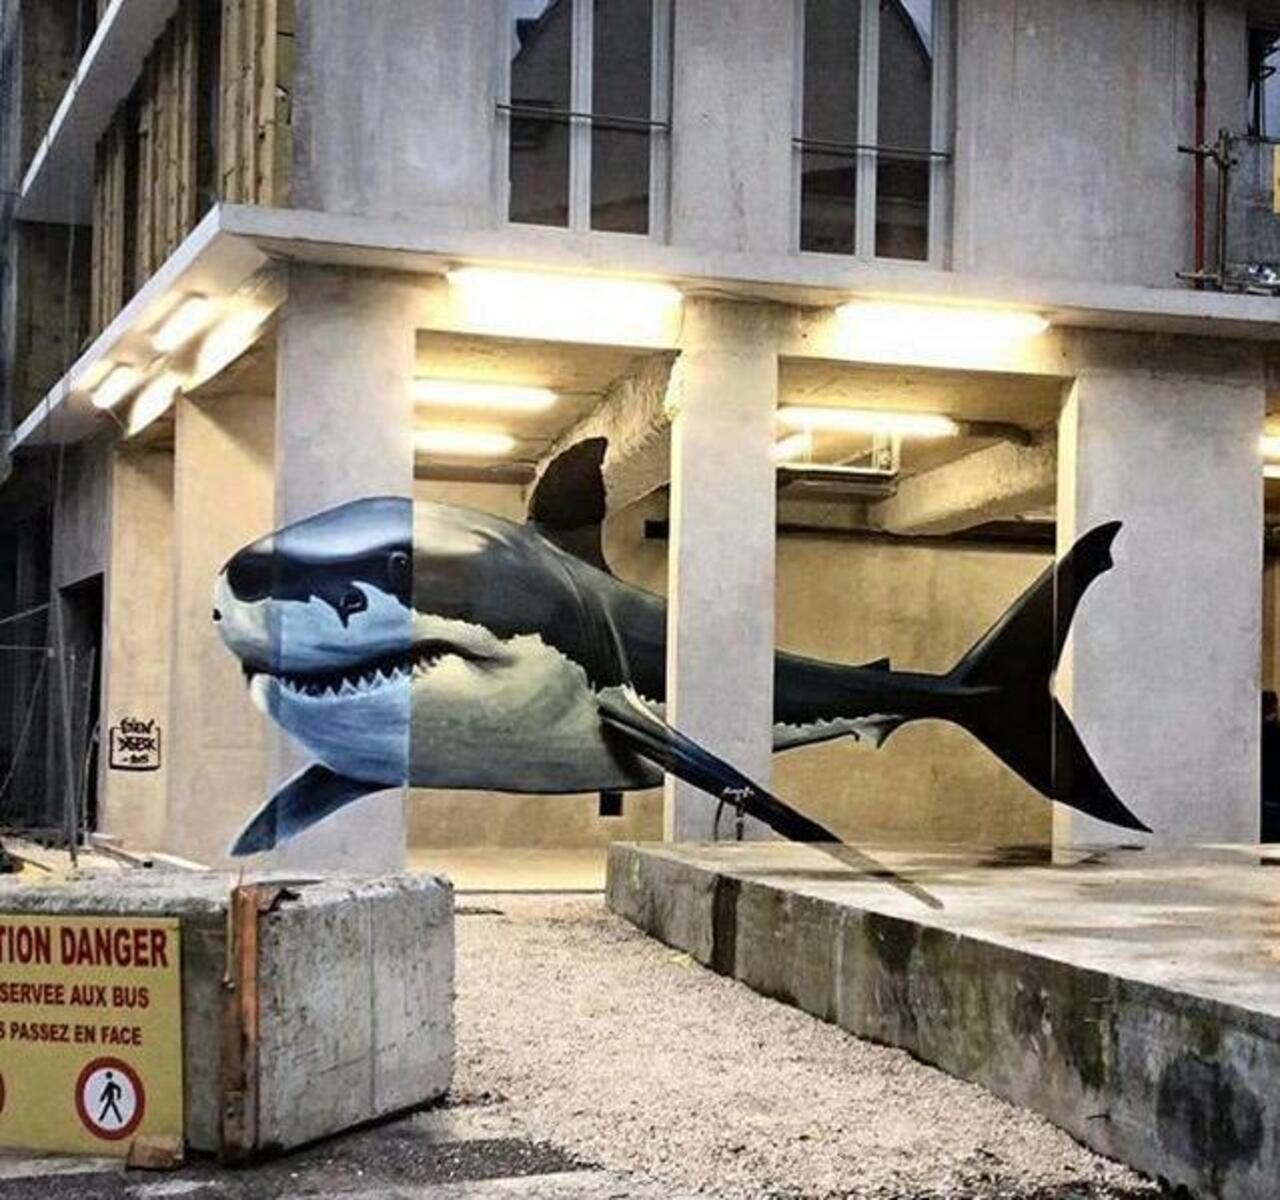 RT @jerome_coumet: Diseck - Grenoble
#3D #art #graffiti #streetart http://t.co/0O03VqtRJ9
Via @GoogleStreetArt